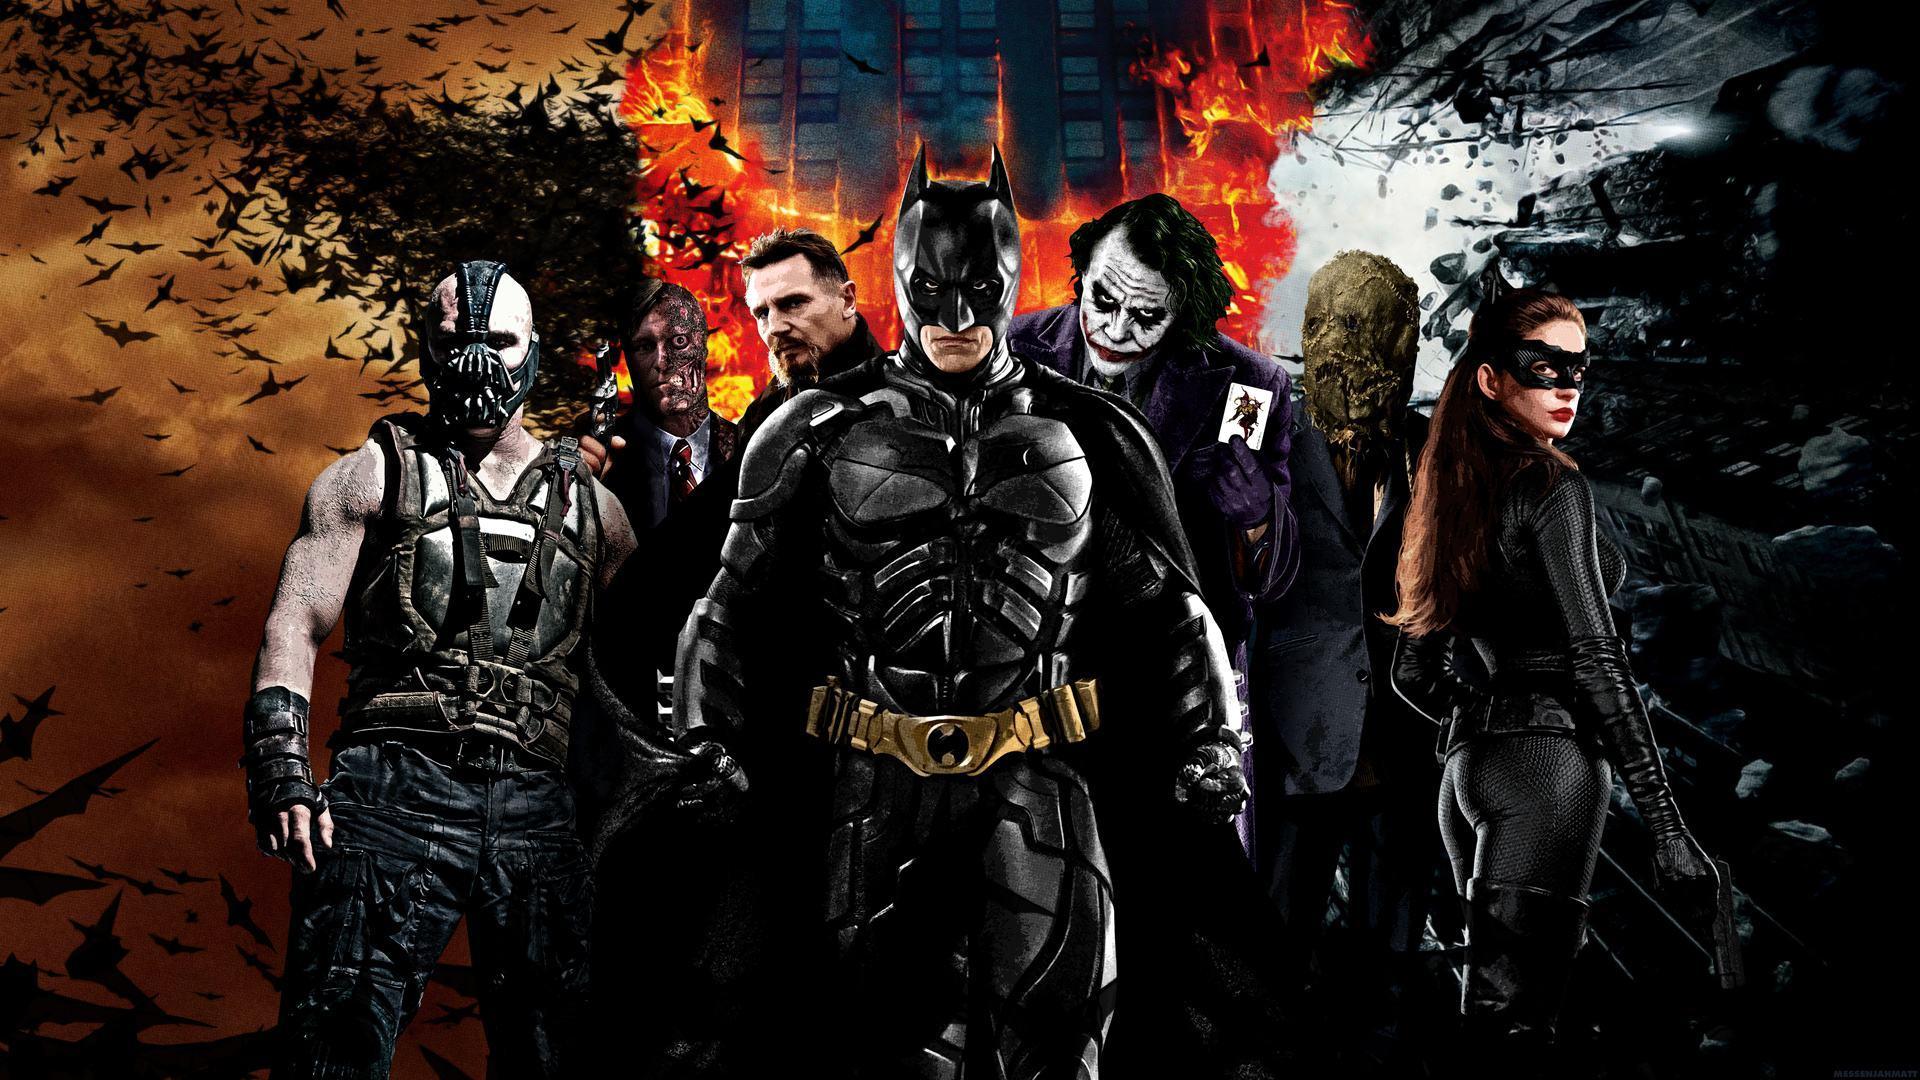 Batman Bane Joker catwoman wallpaper link download